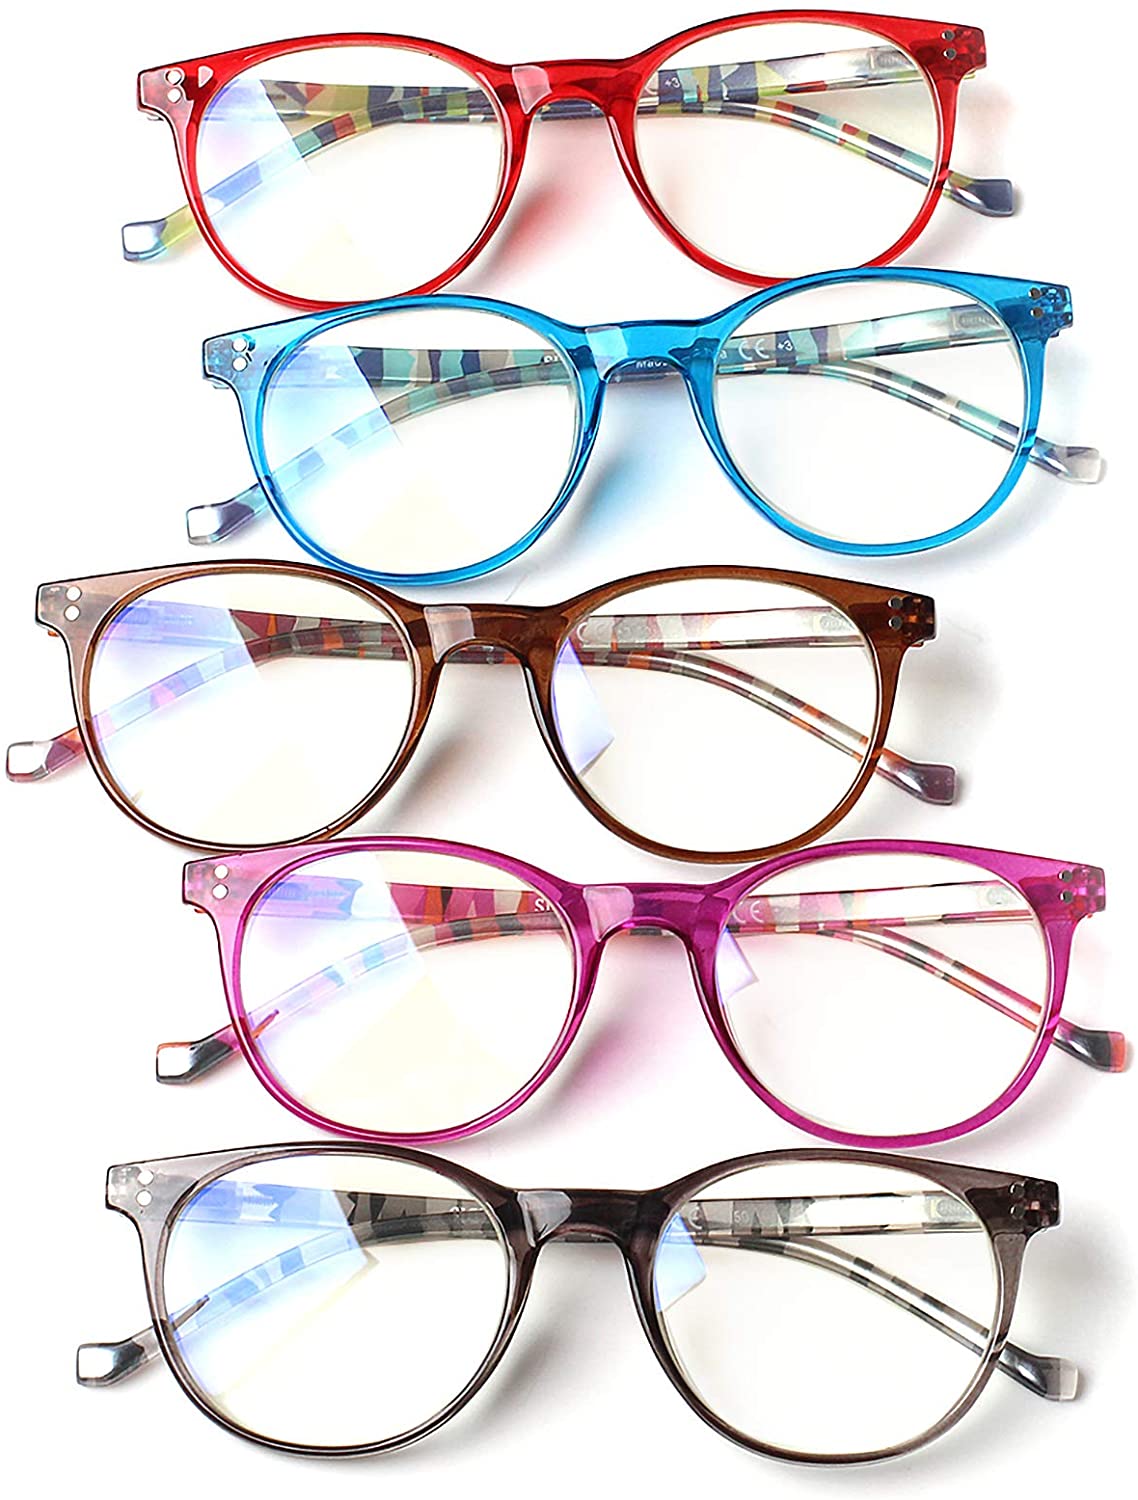 SIGVAN Reading Glasses 5 Packs Blue Light Blocking Eyeglasses Quality Spring Hinge Colorful Computer Readers for Women Men 